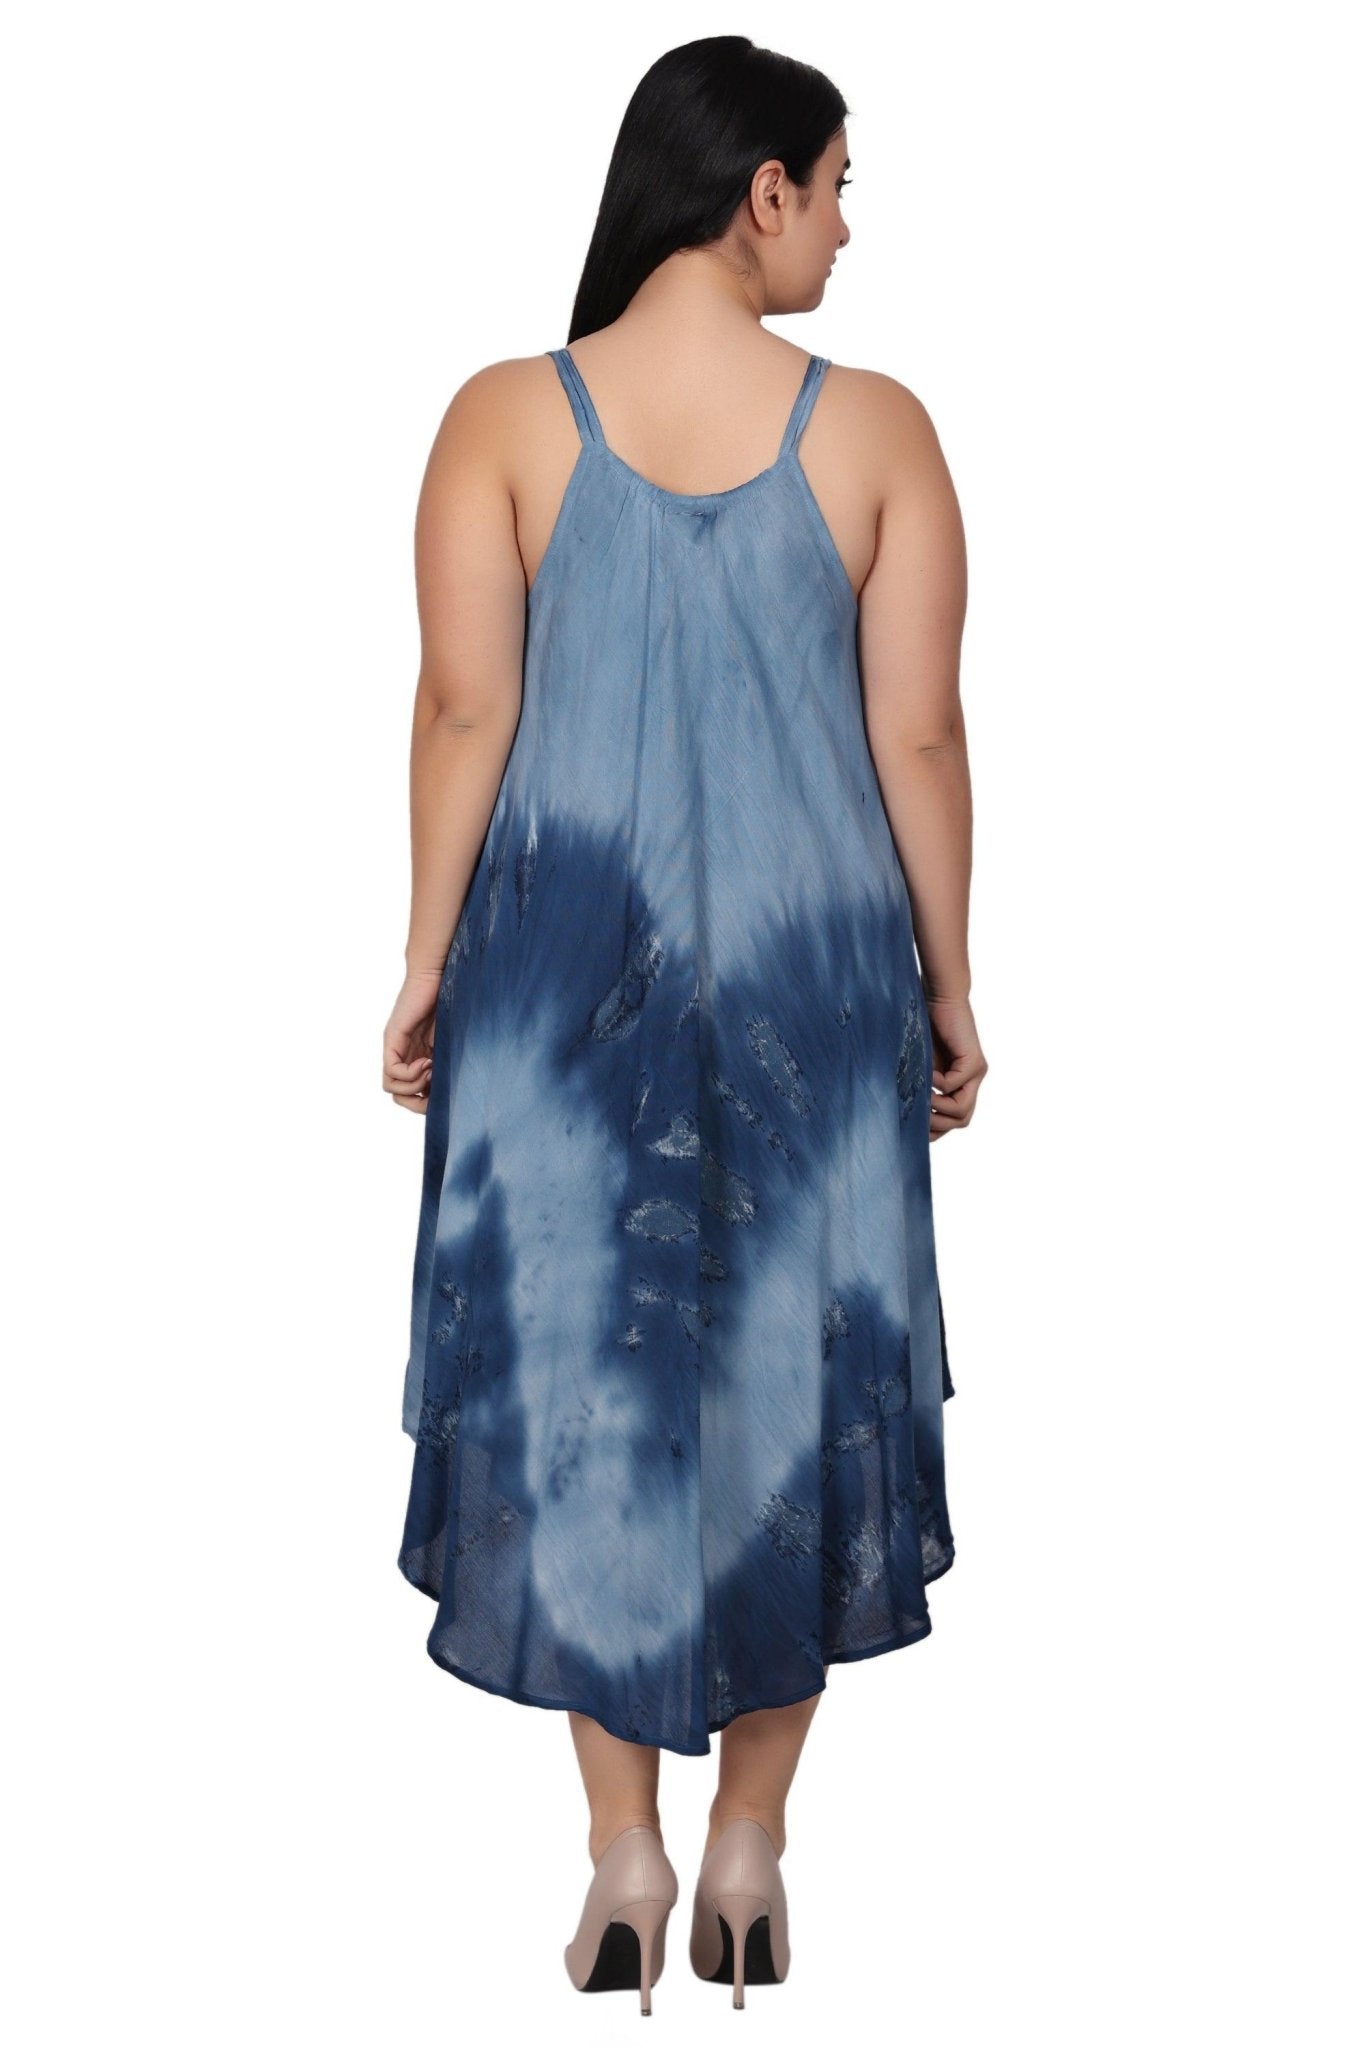 Aloha Tie Dye Dress 482173 - Advance Apparels Inc